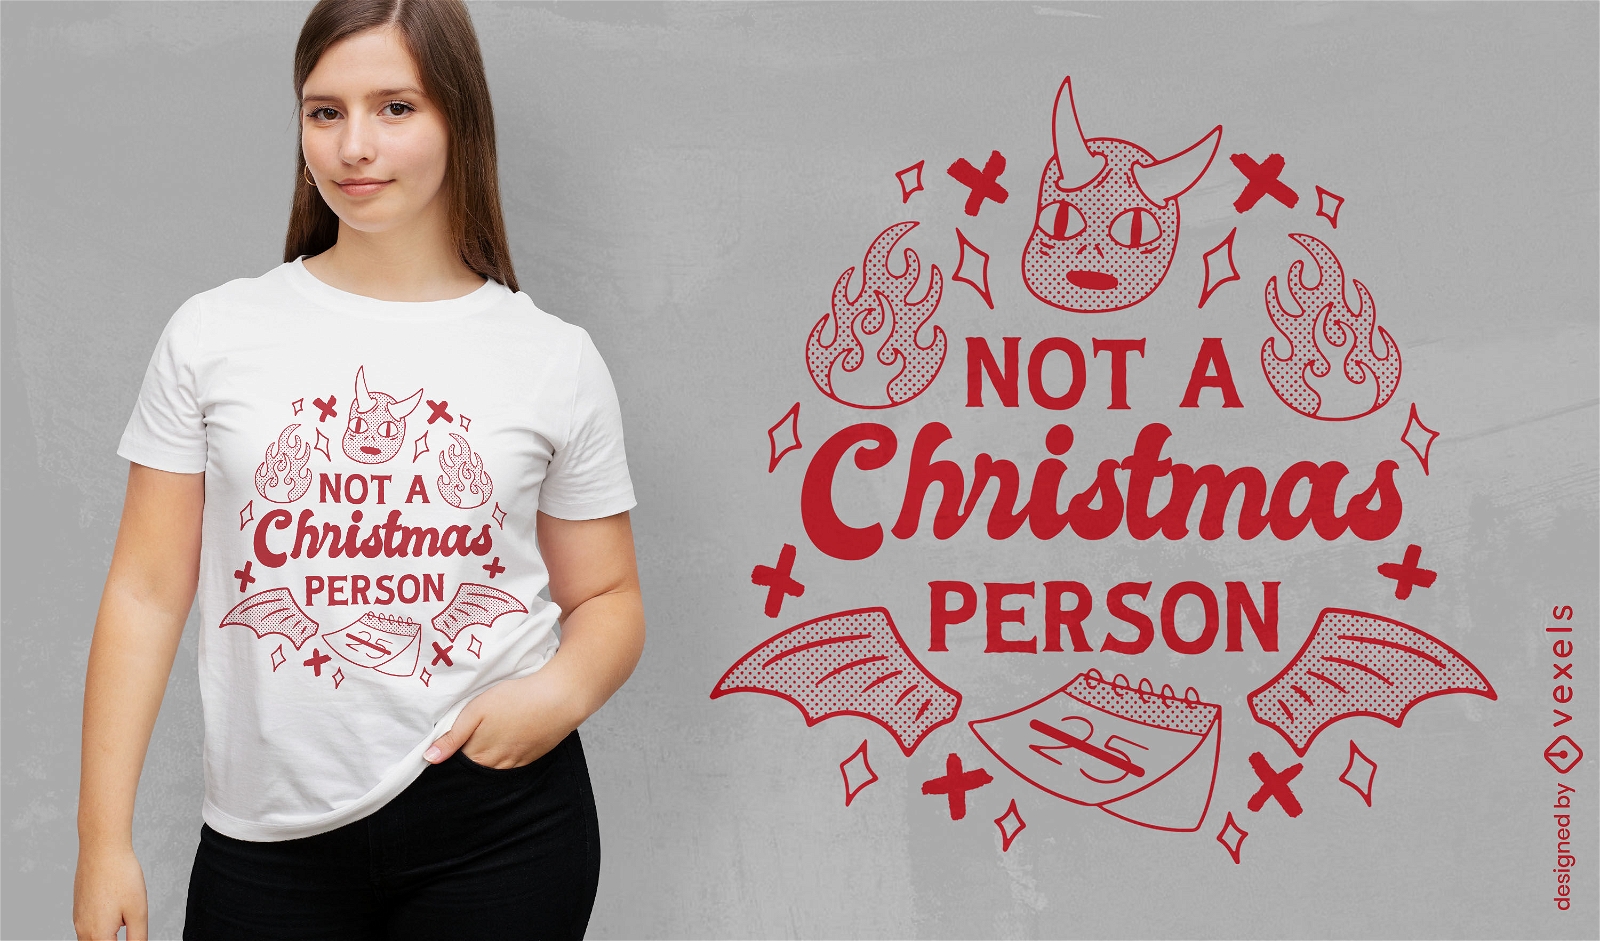 Not a Christmas person t-shirt design